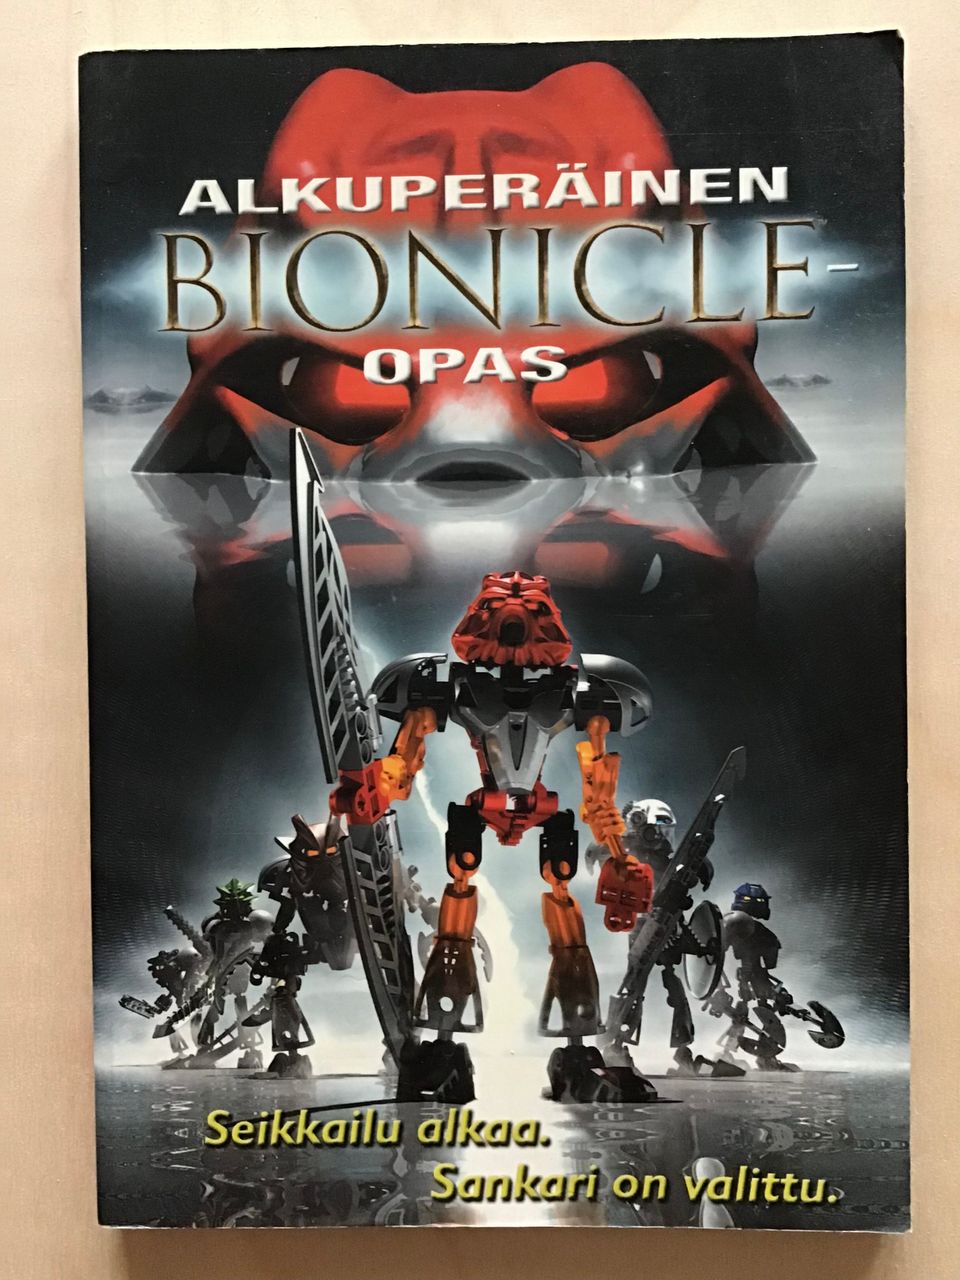 Alkuperäinen Bionicle-opas